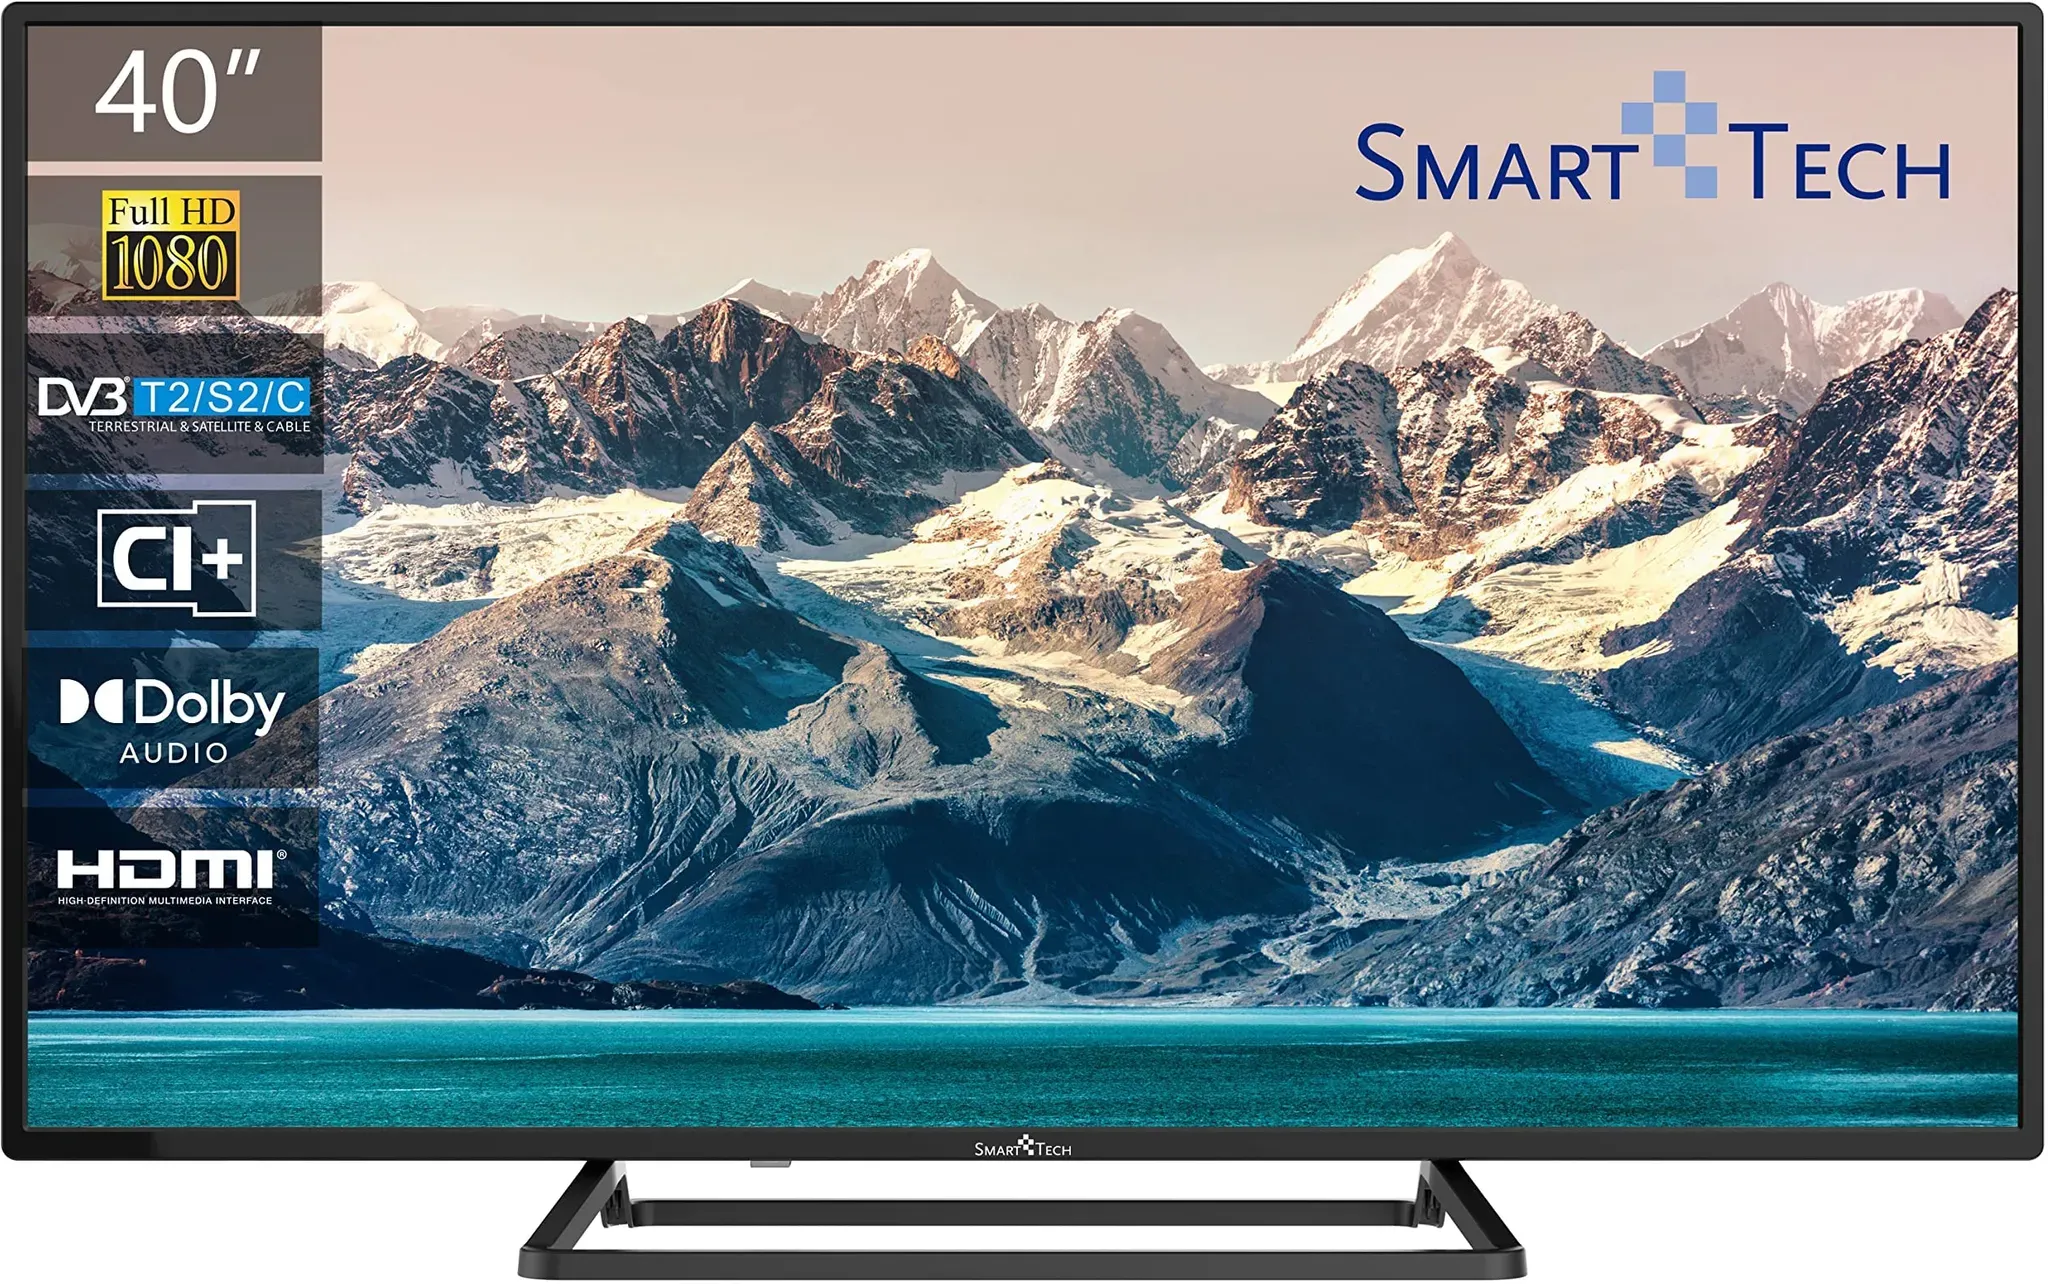 SMART TECH HD LED TV 40 Inch (101 cm) 40FN10T3, Triple Tuner, Dolby Audio, H.264, 3 x HDMI, 2 x USB, Black